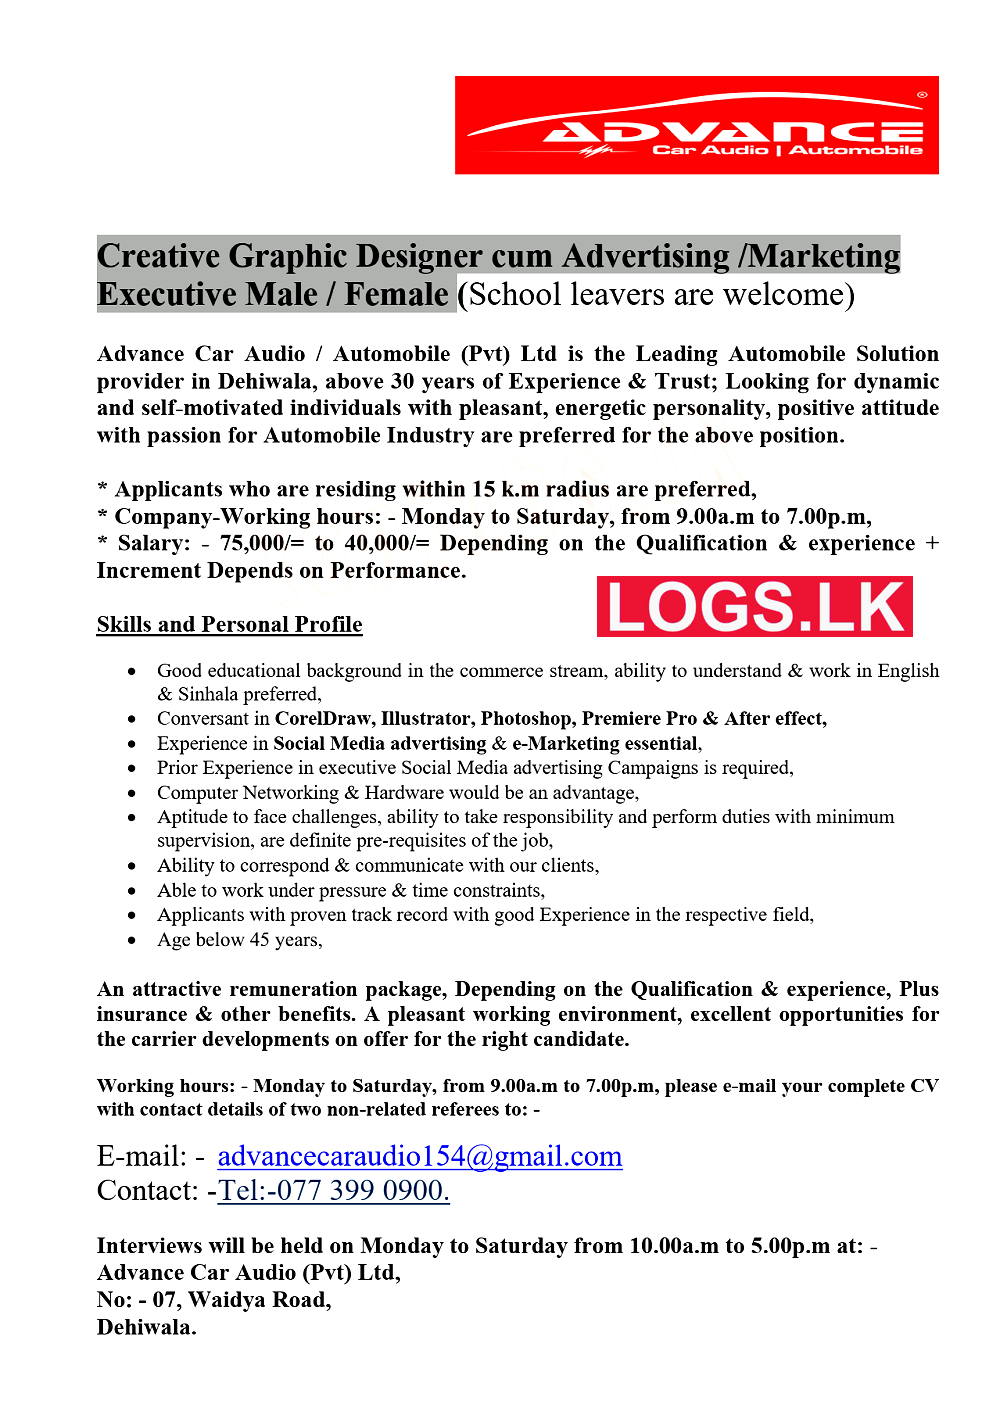 Creative Graphic Designer Job Vacancy at Advance Car Audio Job Vacancies in Sri Lanka